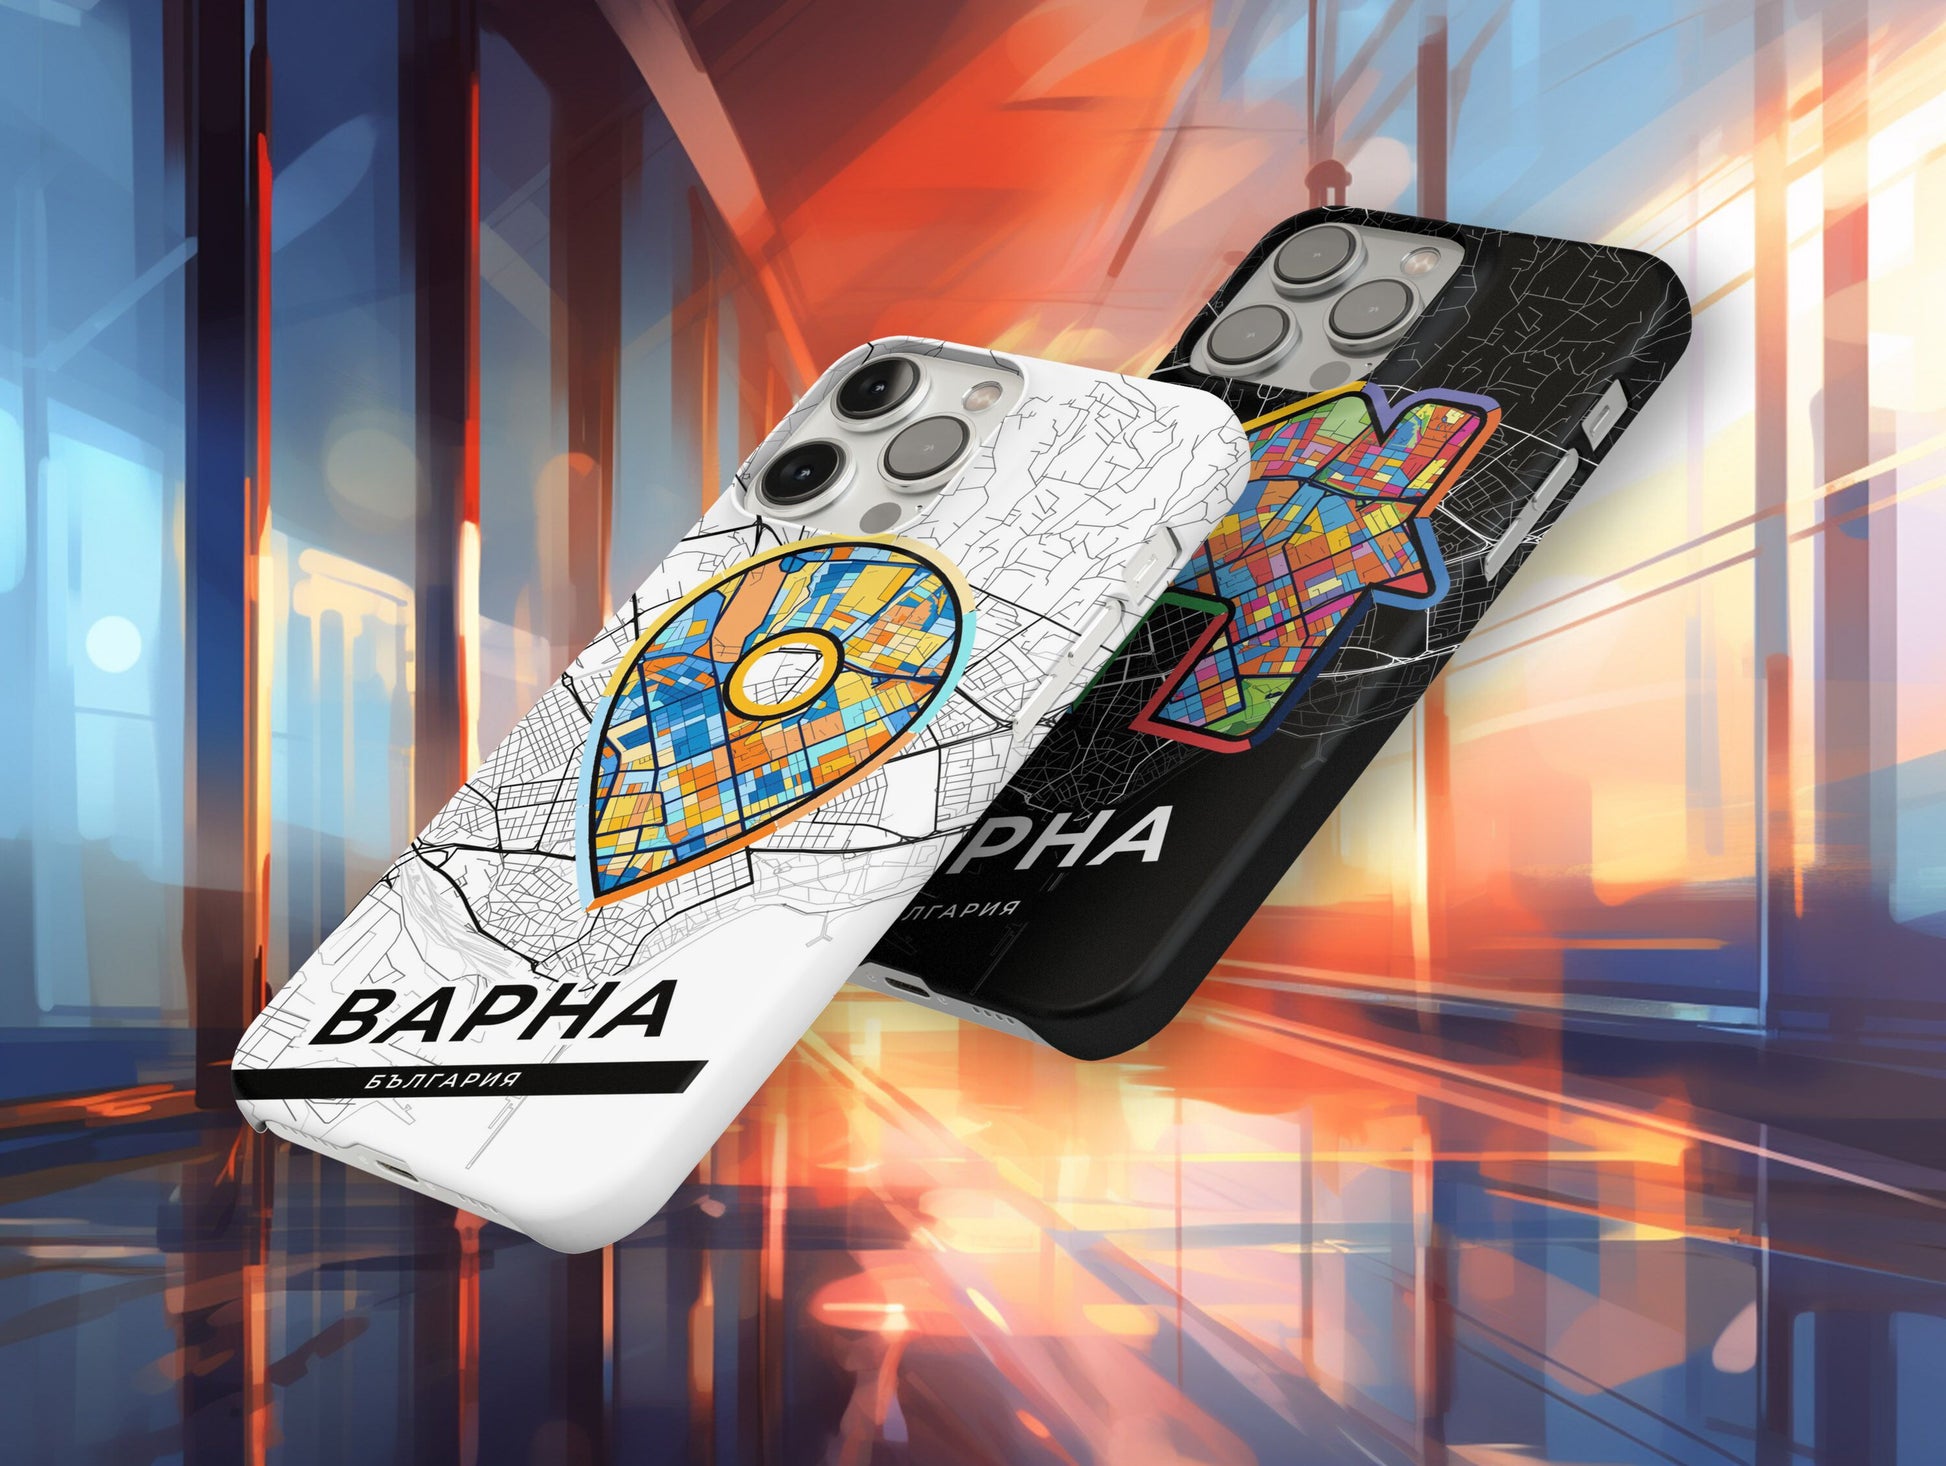 Варна България slim phone case with colorful icon. Birthday, wedding or housewarming gift. Couple match cases.